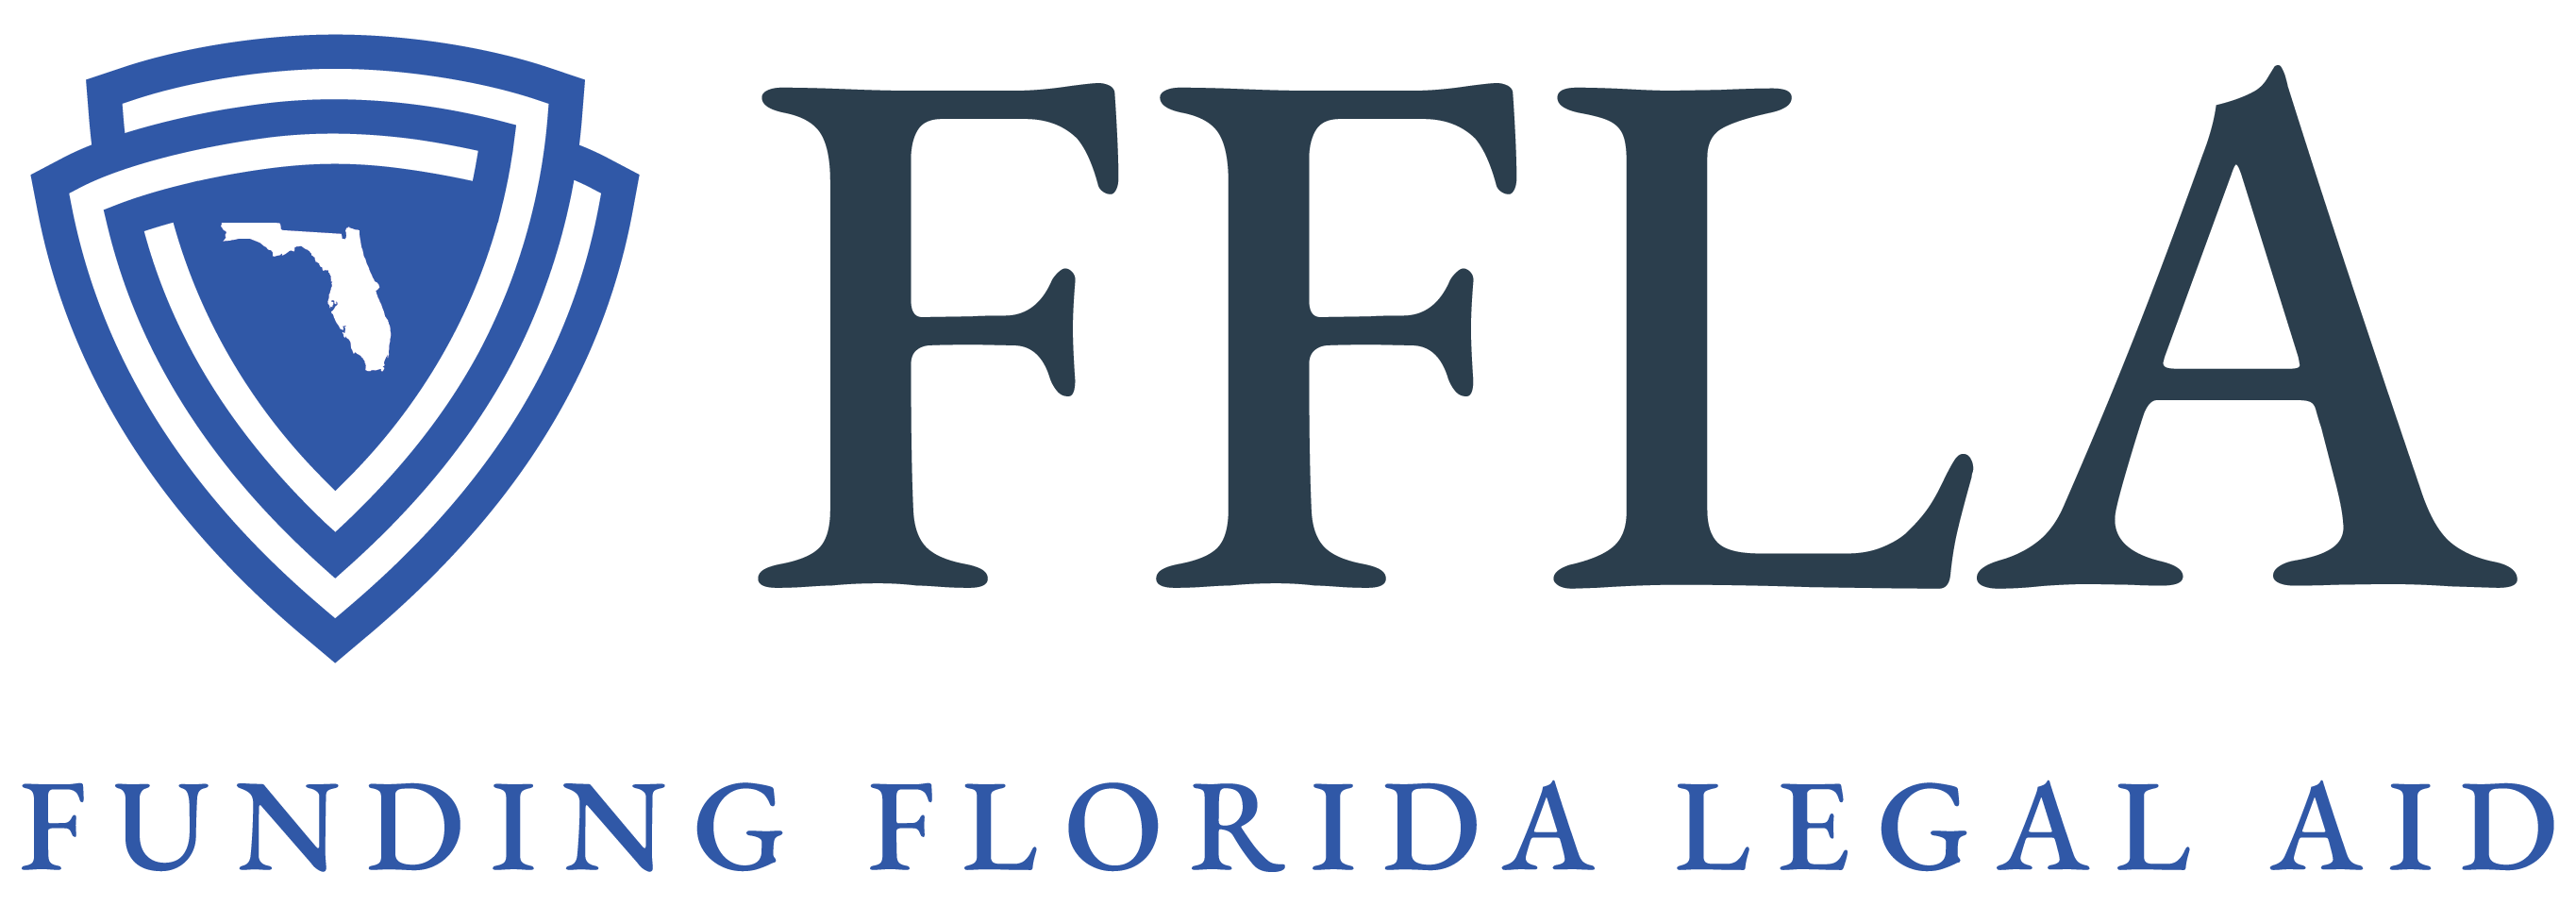 Funding Florida Legal Fund